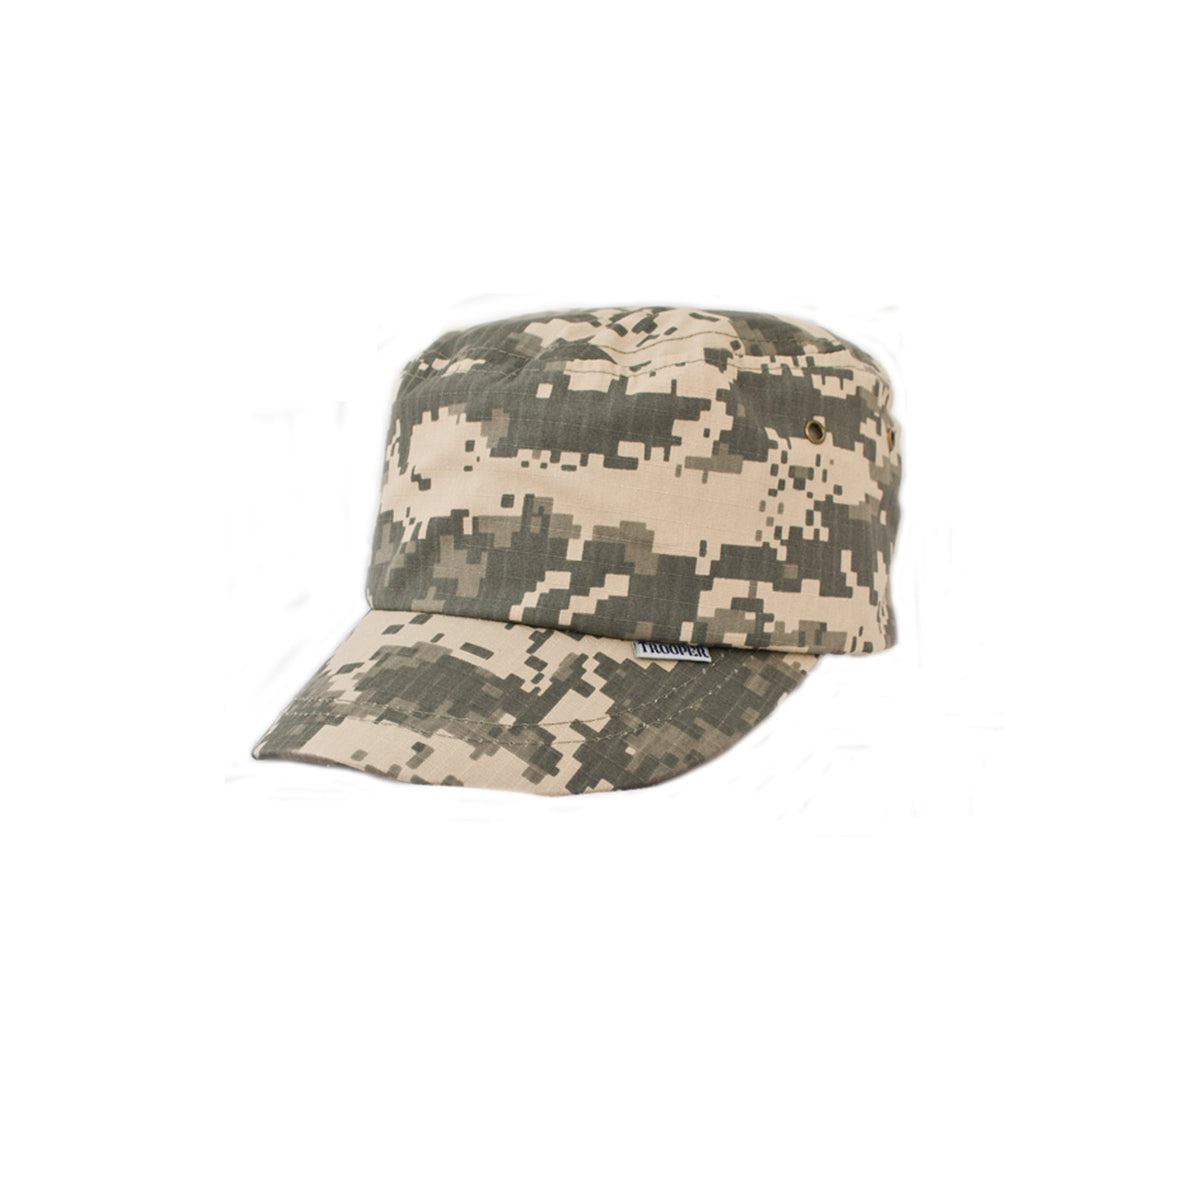 Trooper Youth Army ACU Cap